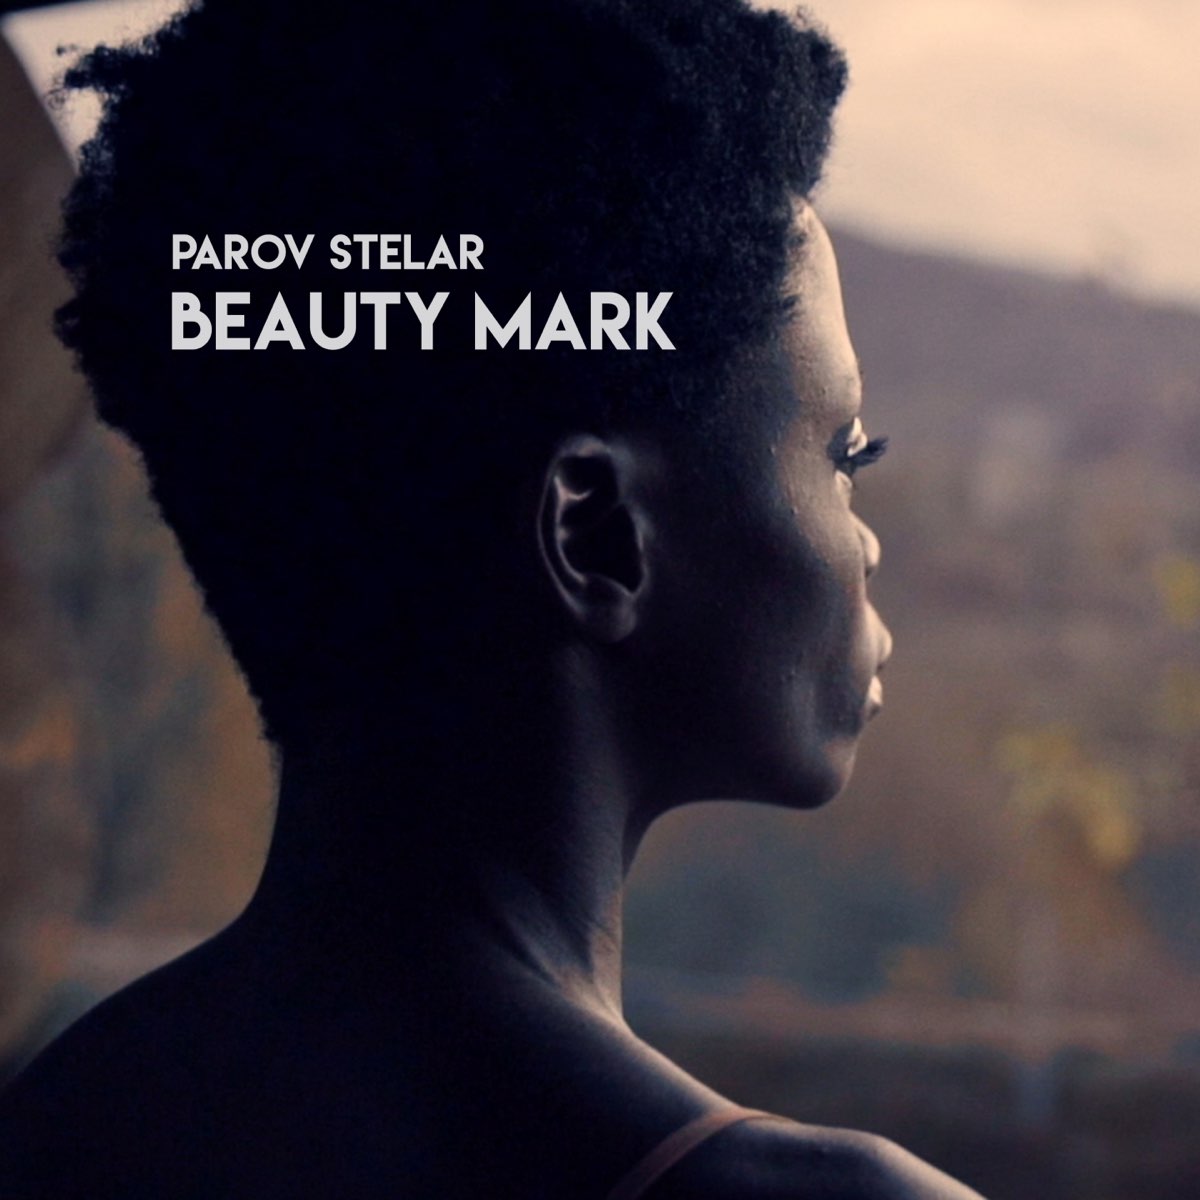 Beautiful mark. Parov Stelar Beauty Mark ft. Anduze. Паров Стилар альбомы. Parov Stelar обложки. Beauty Mark.